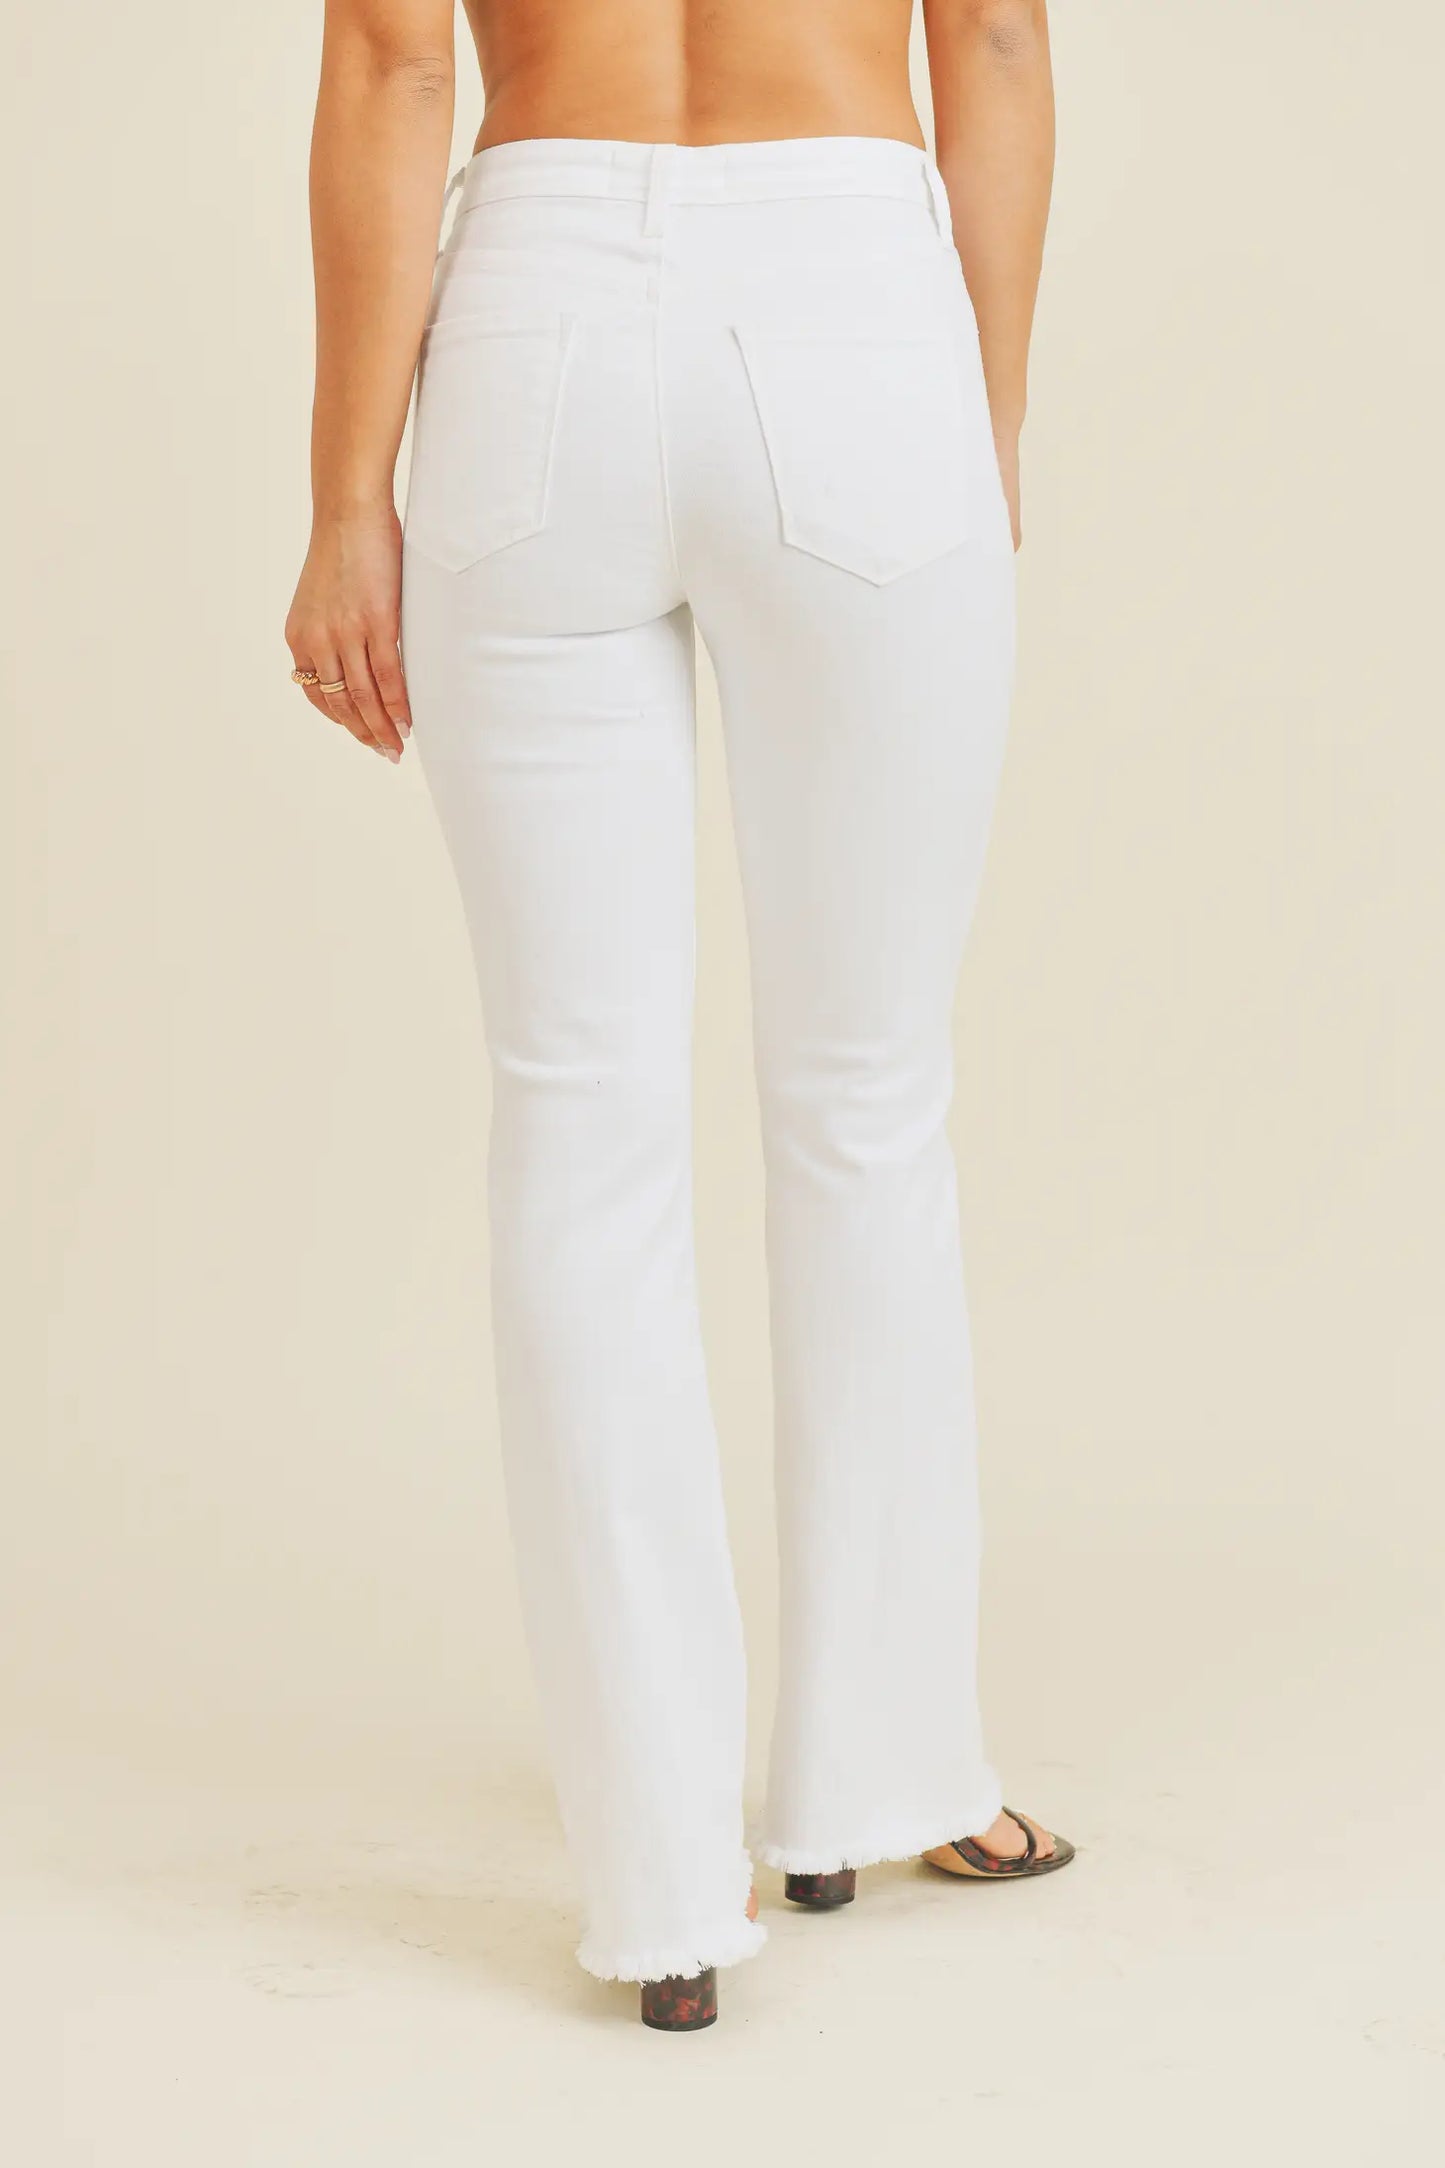 Classic Bootcut Jean in White